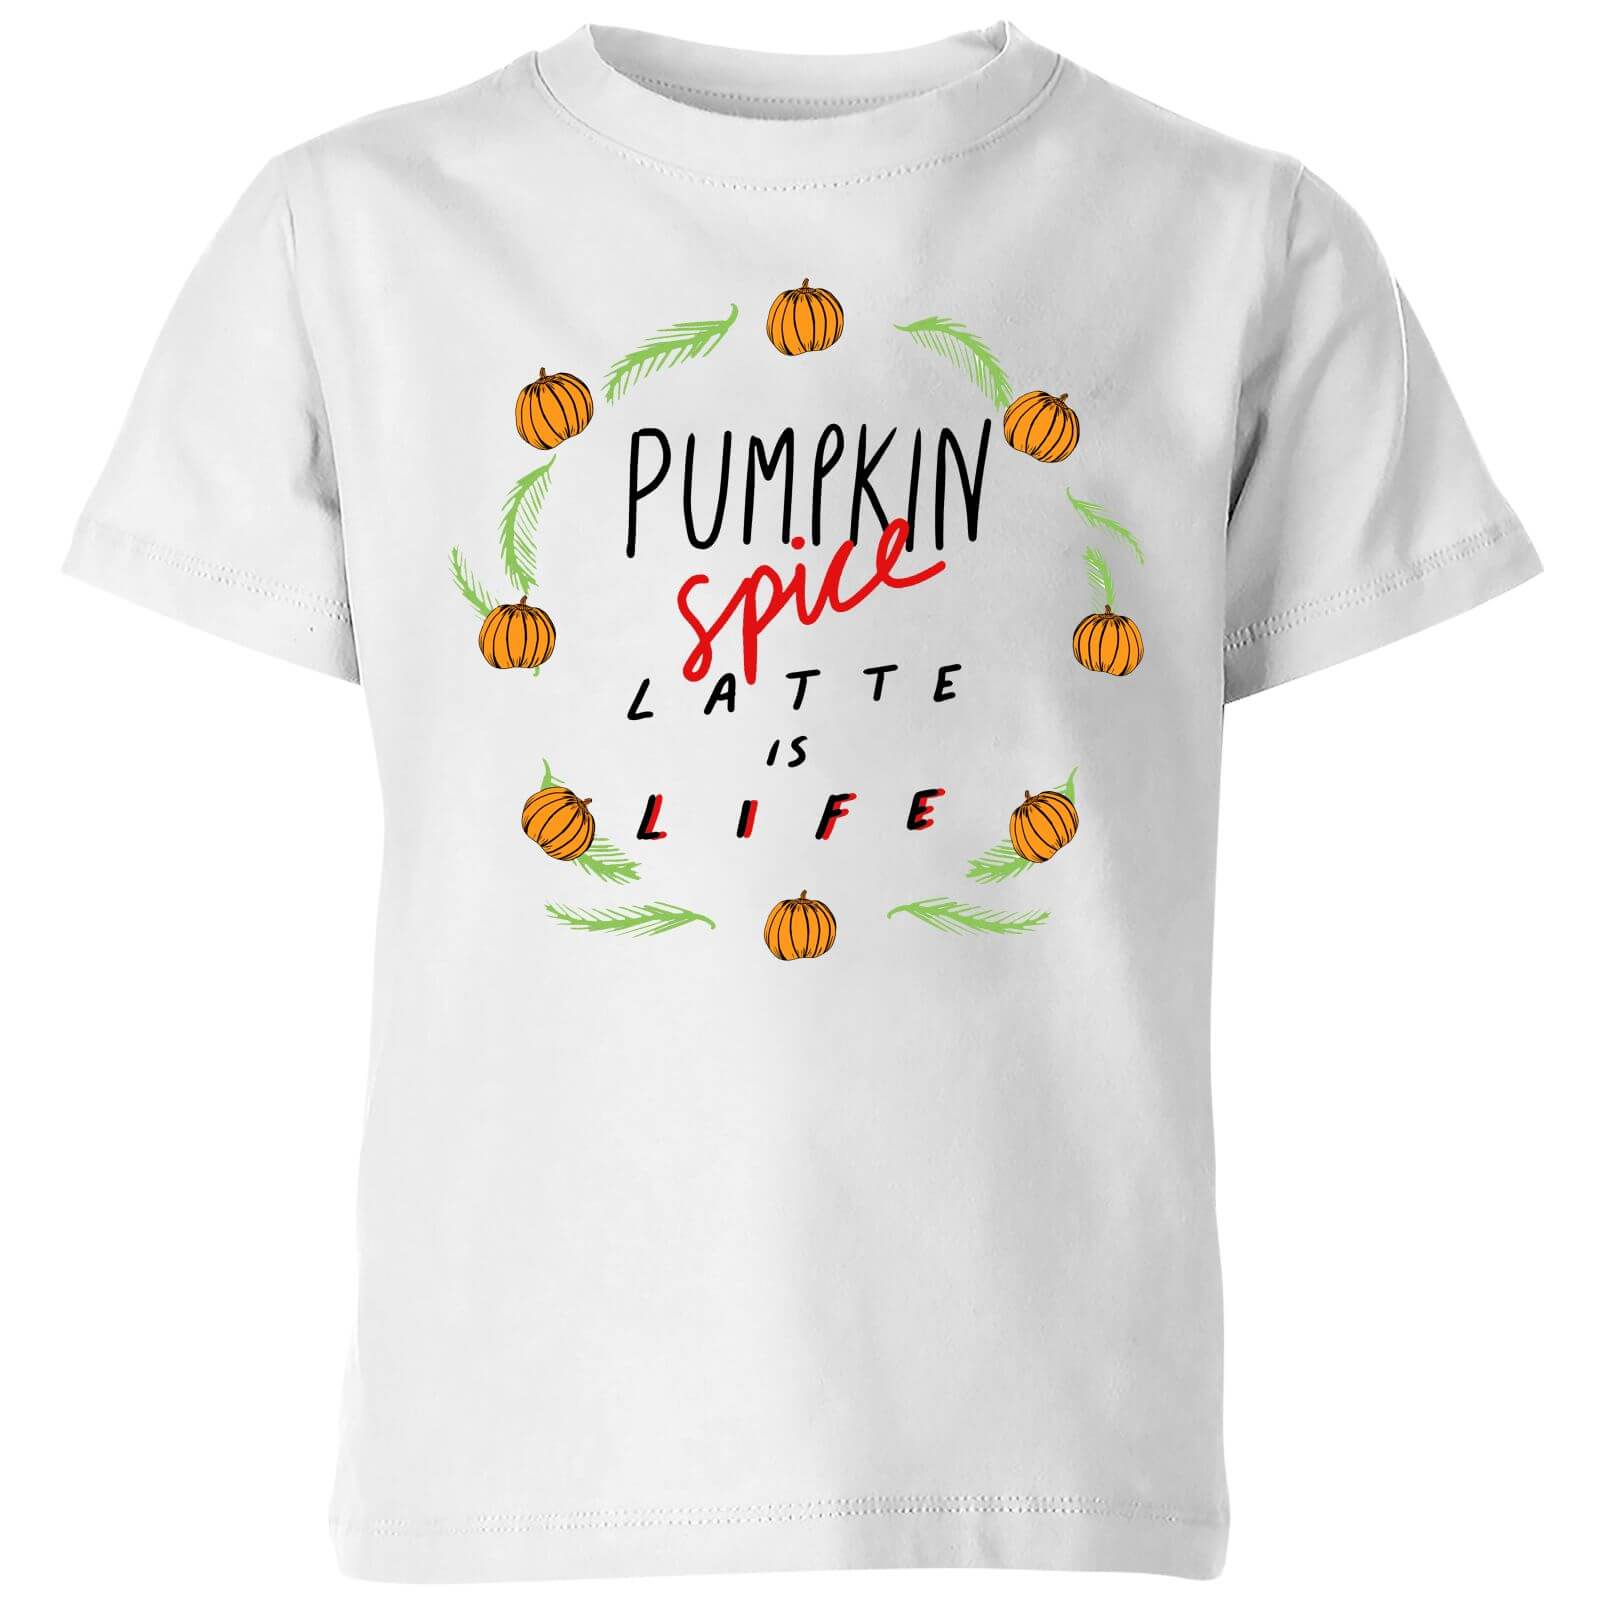 Pumpkin Spice Latte Is Life Kids' T-Shirt - White - 3-4 Years - White